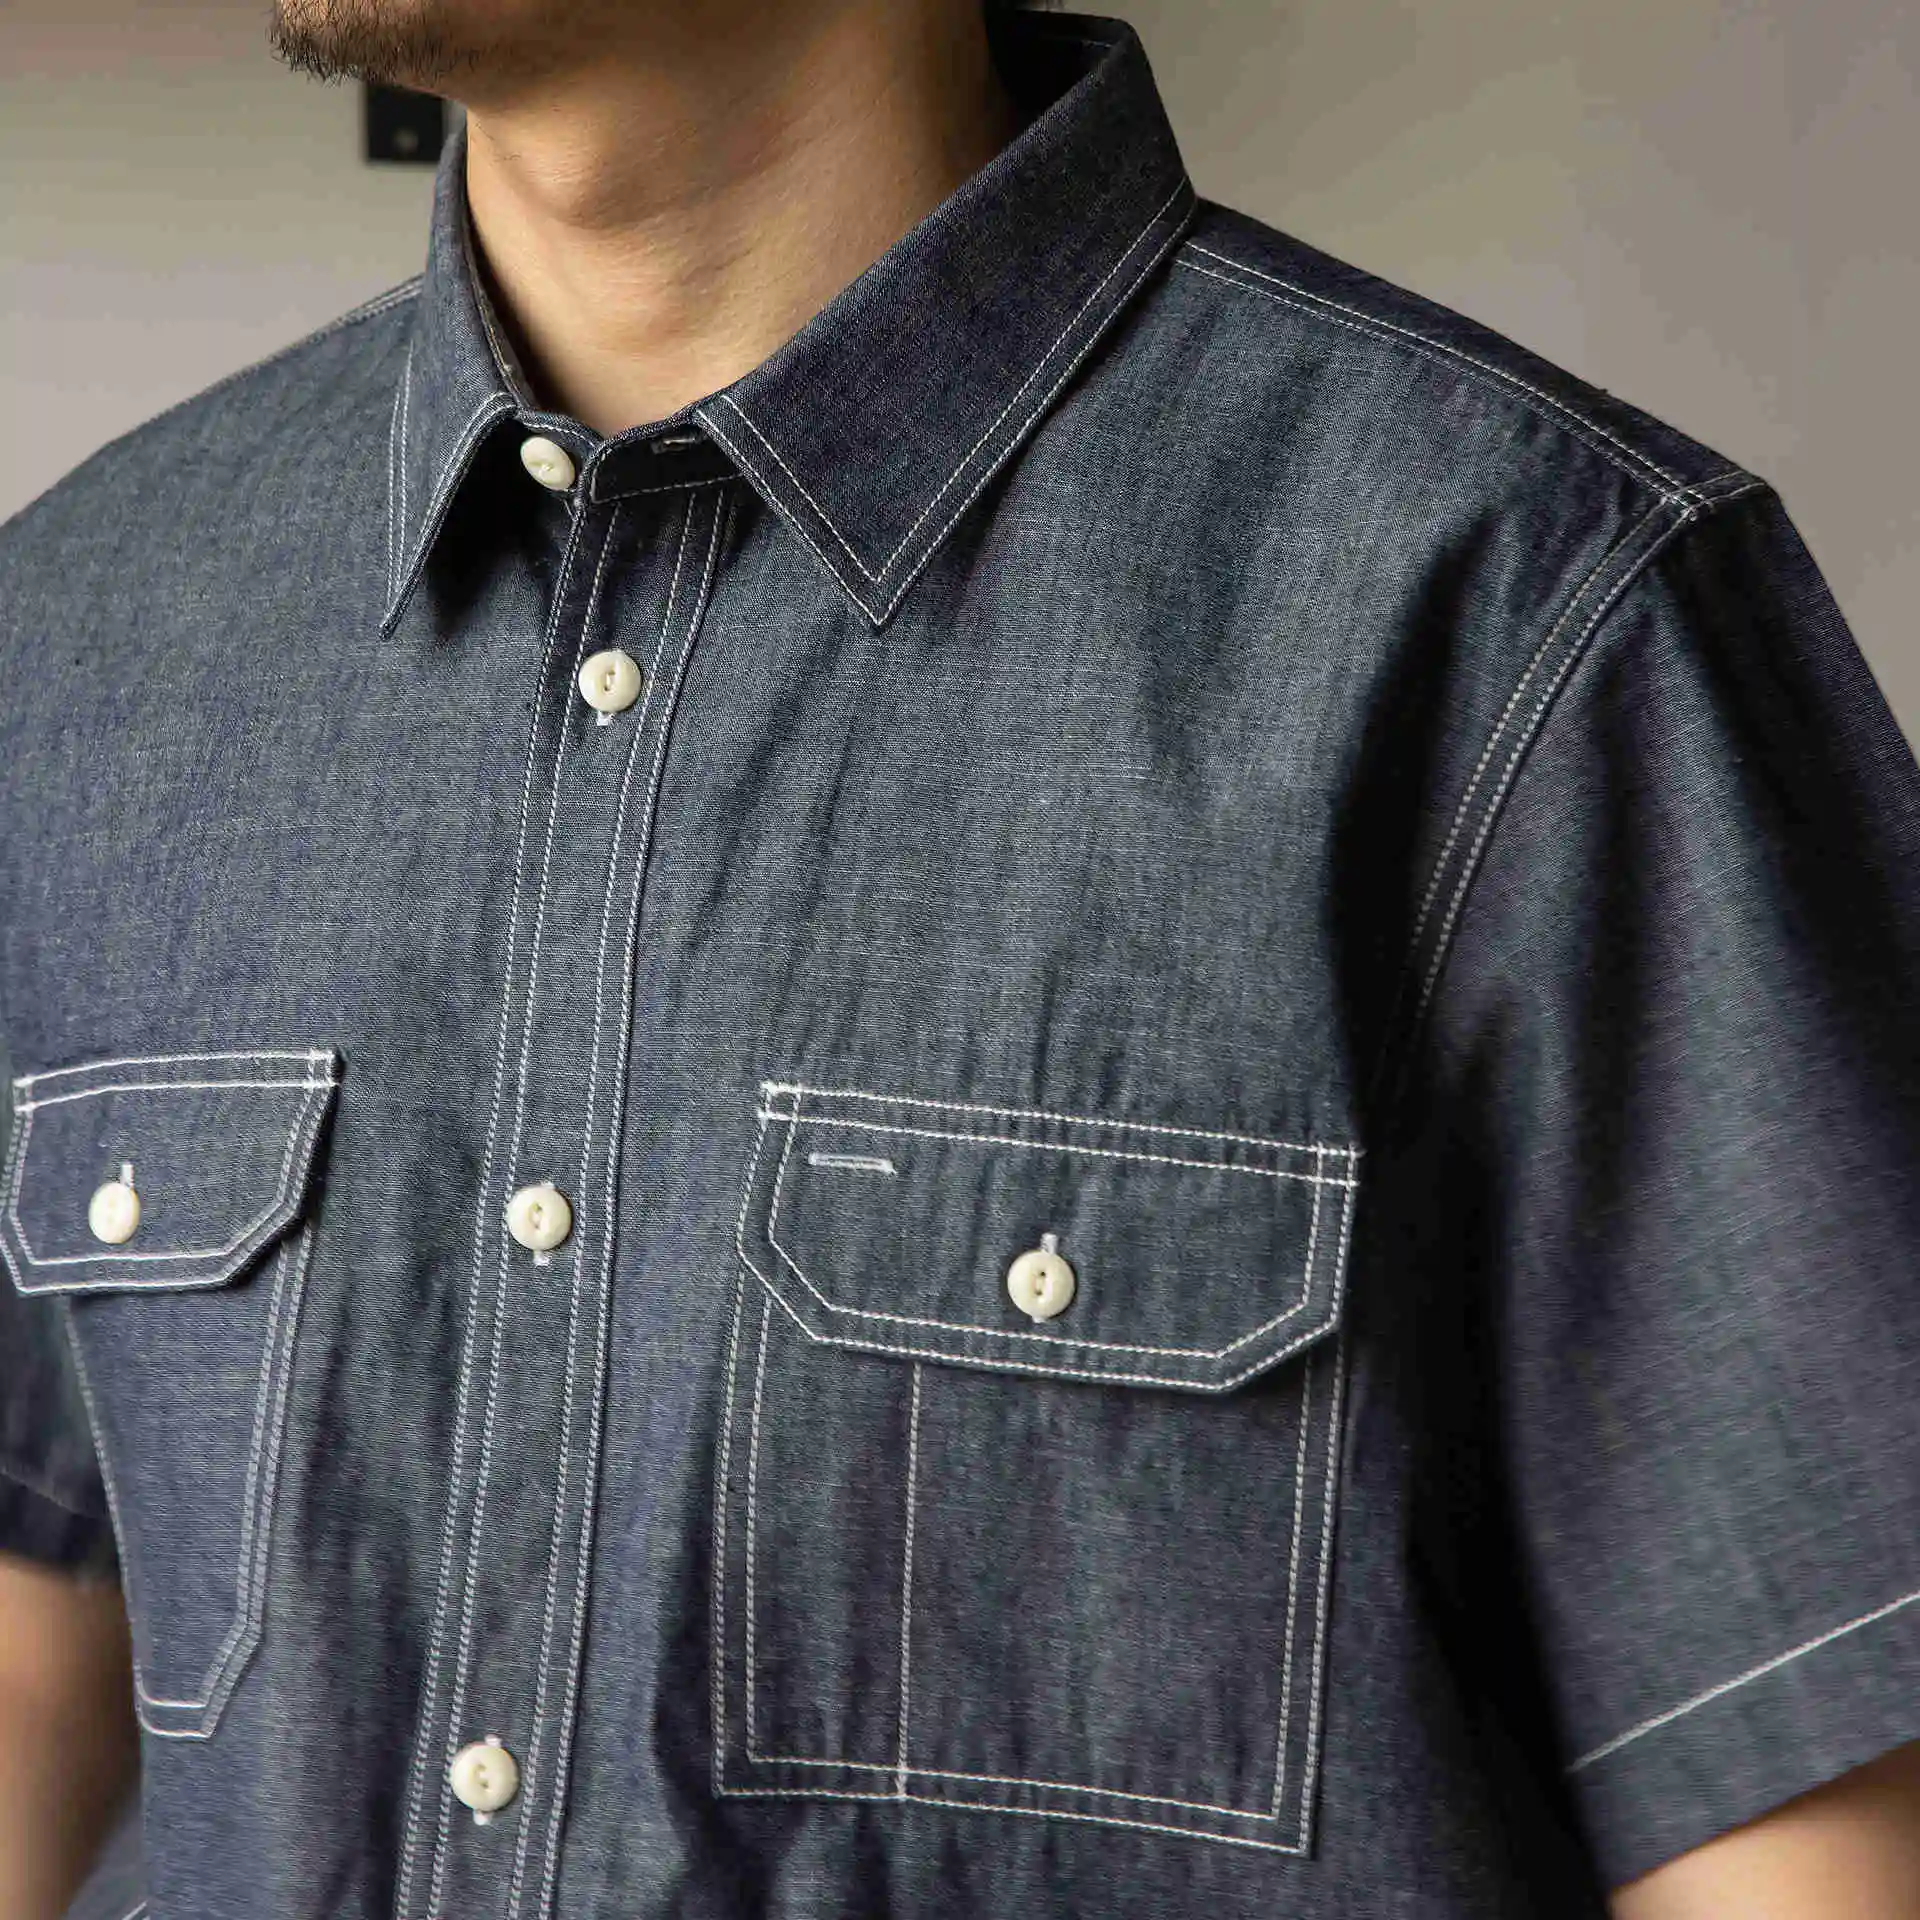 ST-0049 Big US Size Genuine Super Quality Vintage Stylish Durable Loose Fitting Mans Cotton 8oz Denim Shirt